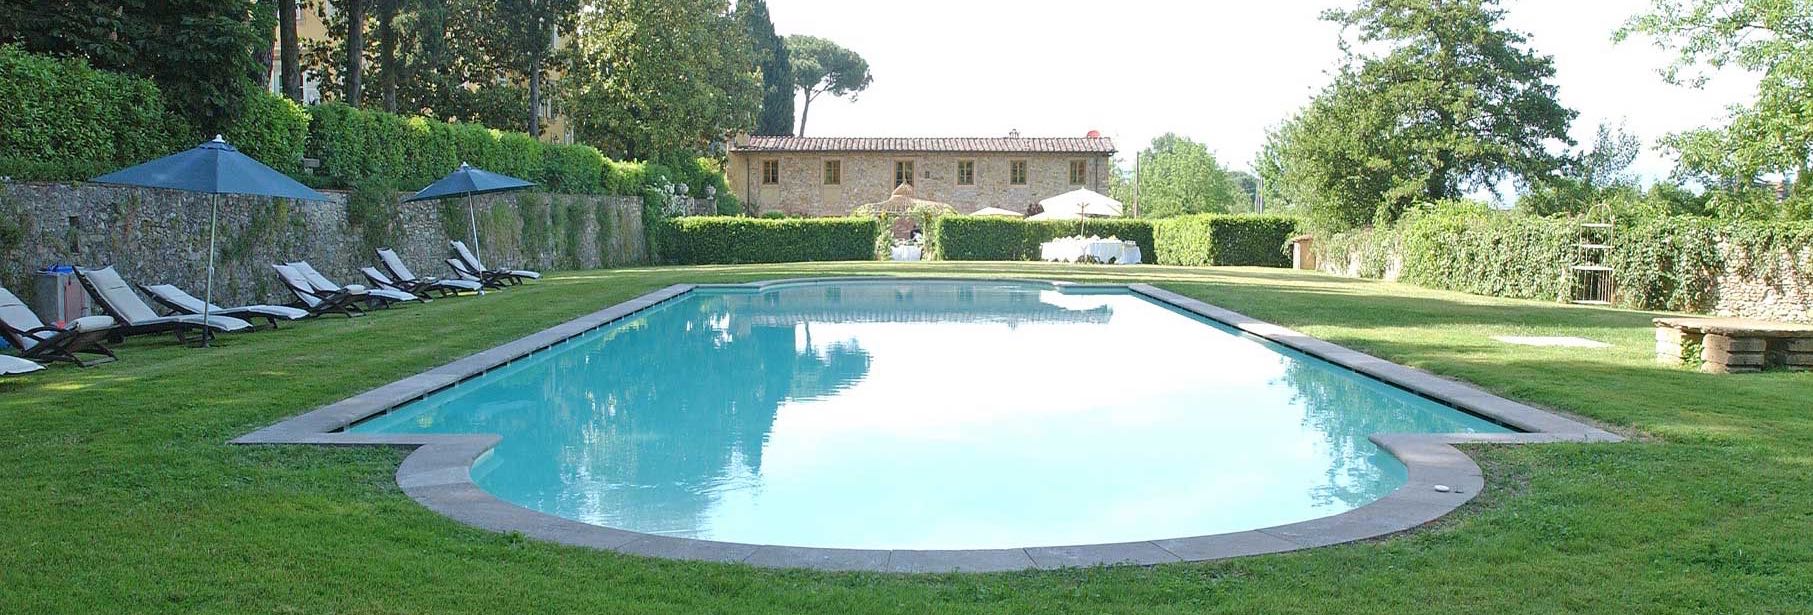 Luxury Villa with Pool